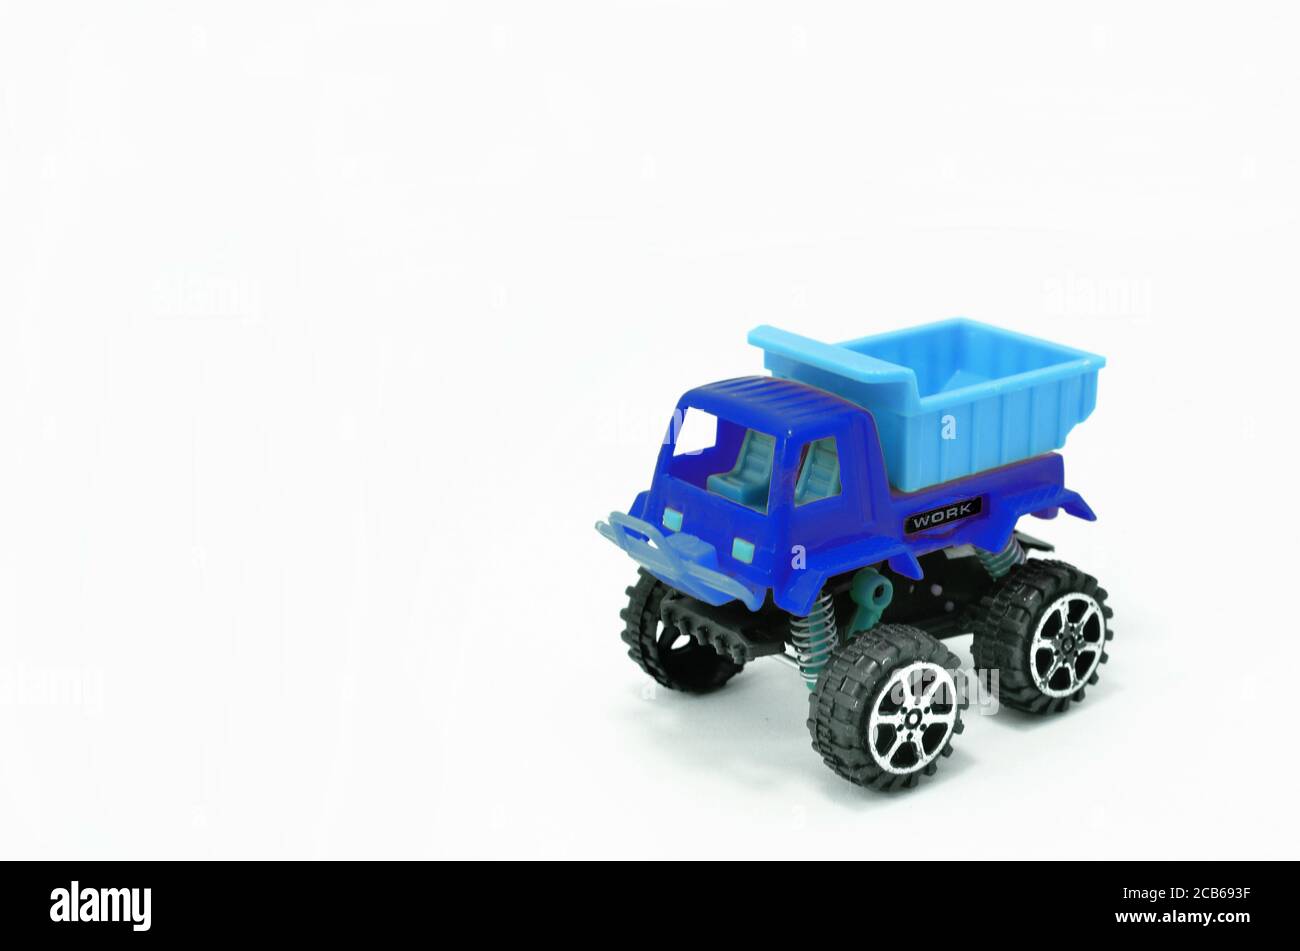 Plastic dump truck toy construction vehicle isolated on white background Stock Photo